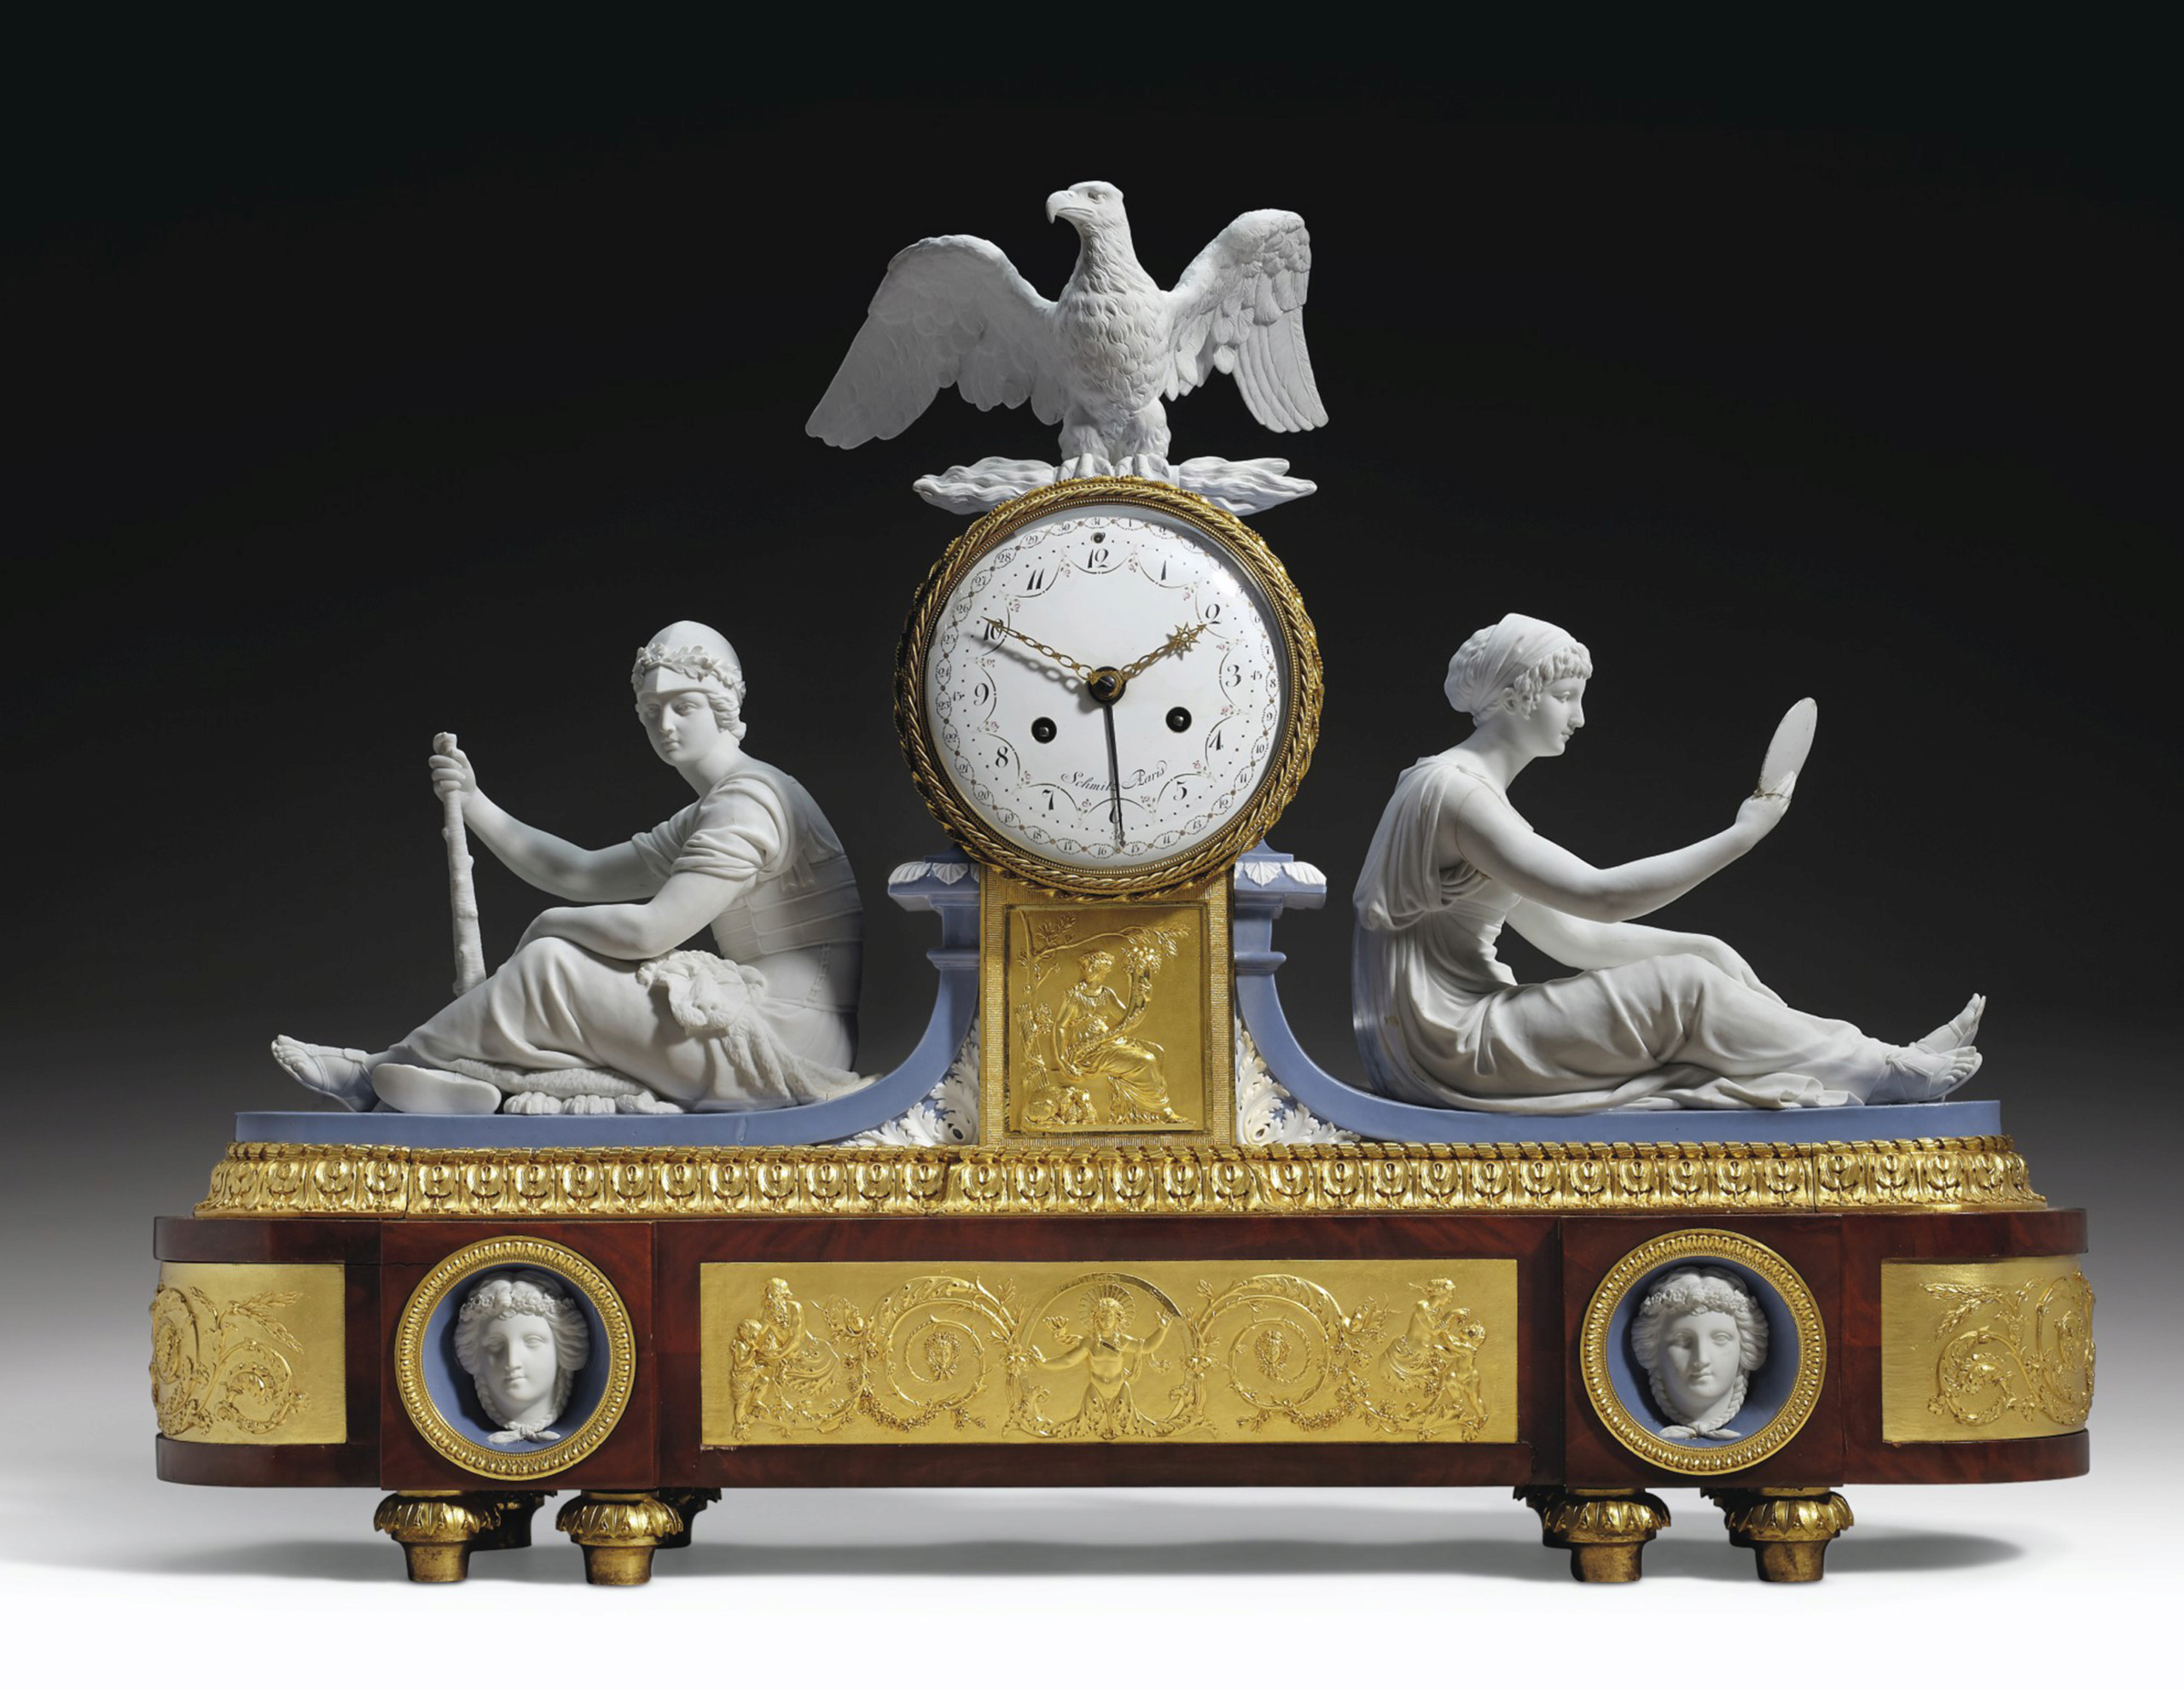 Horloges et pendules du XVIIIe siècle - Page 2 2020_n60